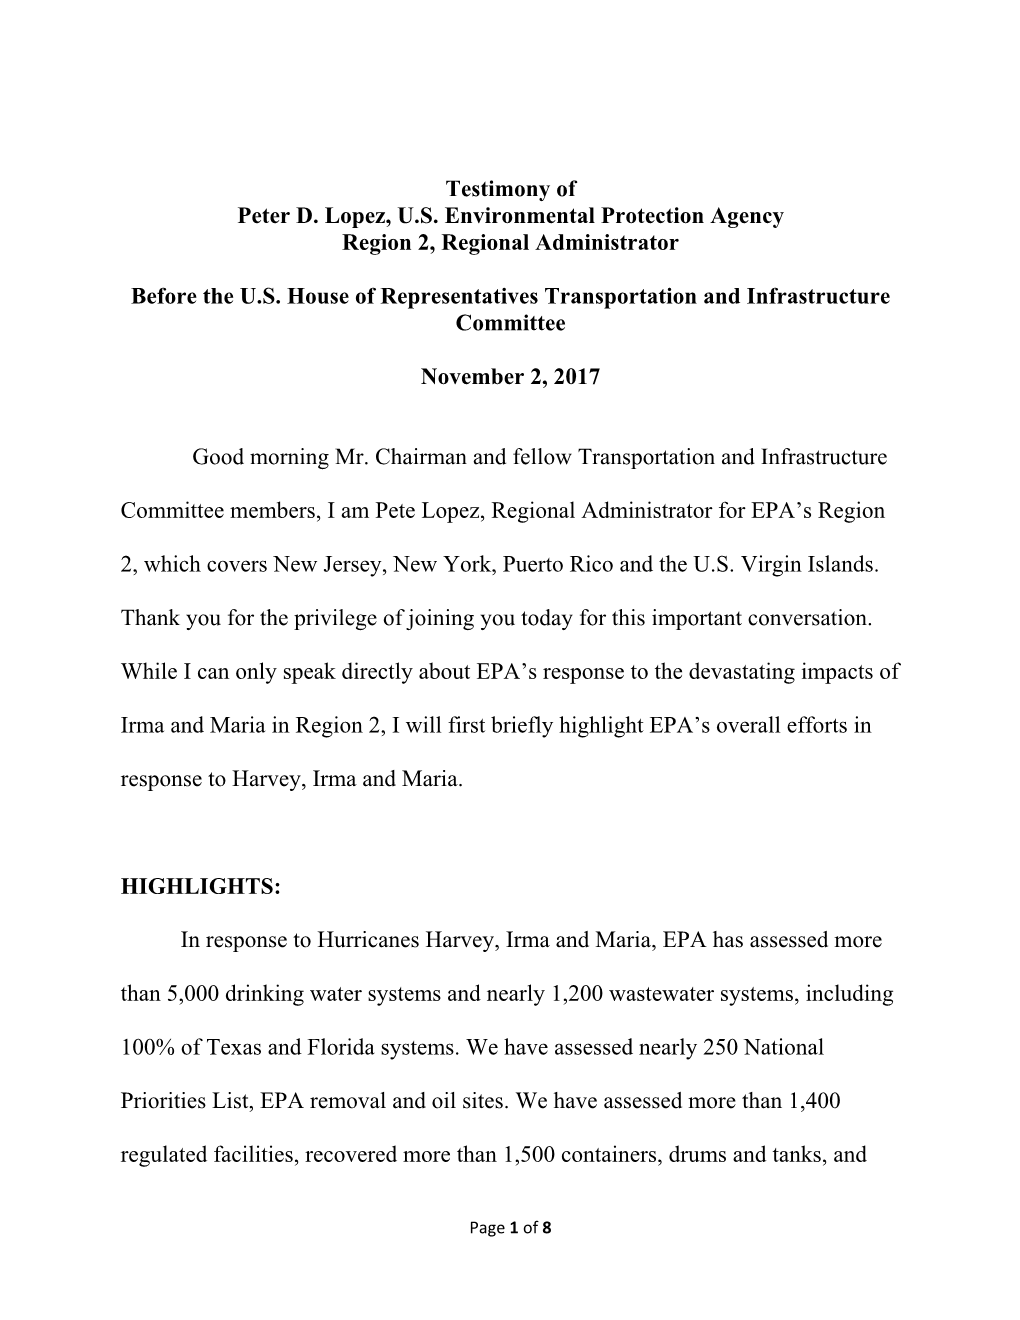 Testimony of Peter D. Lopez, U.S. Environmental Protection Agency Region 2, Regional Administrator